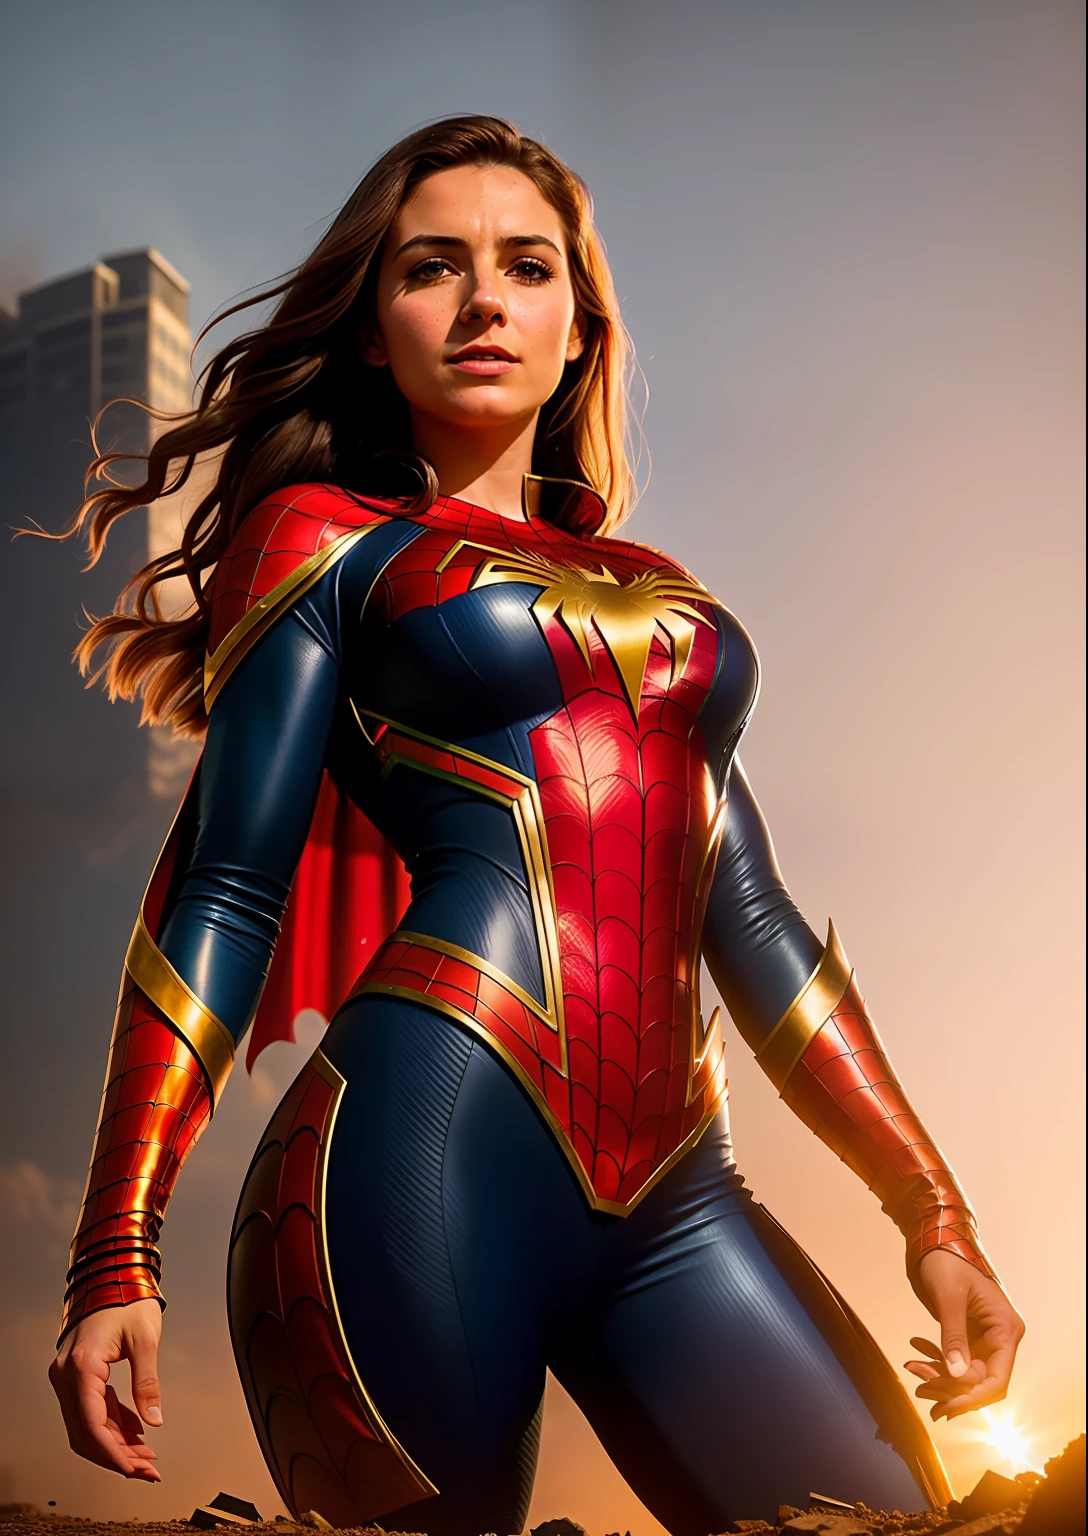 Superhero Woman Cartoon Action Poses Collection Stock Vector (Royalty Free)  464489441 | Shutterstock